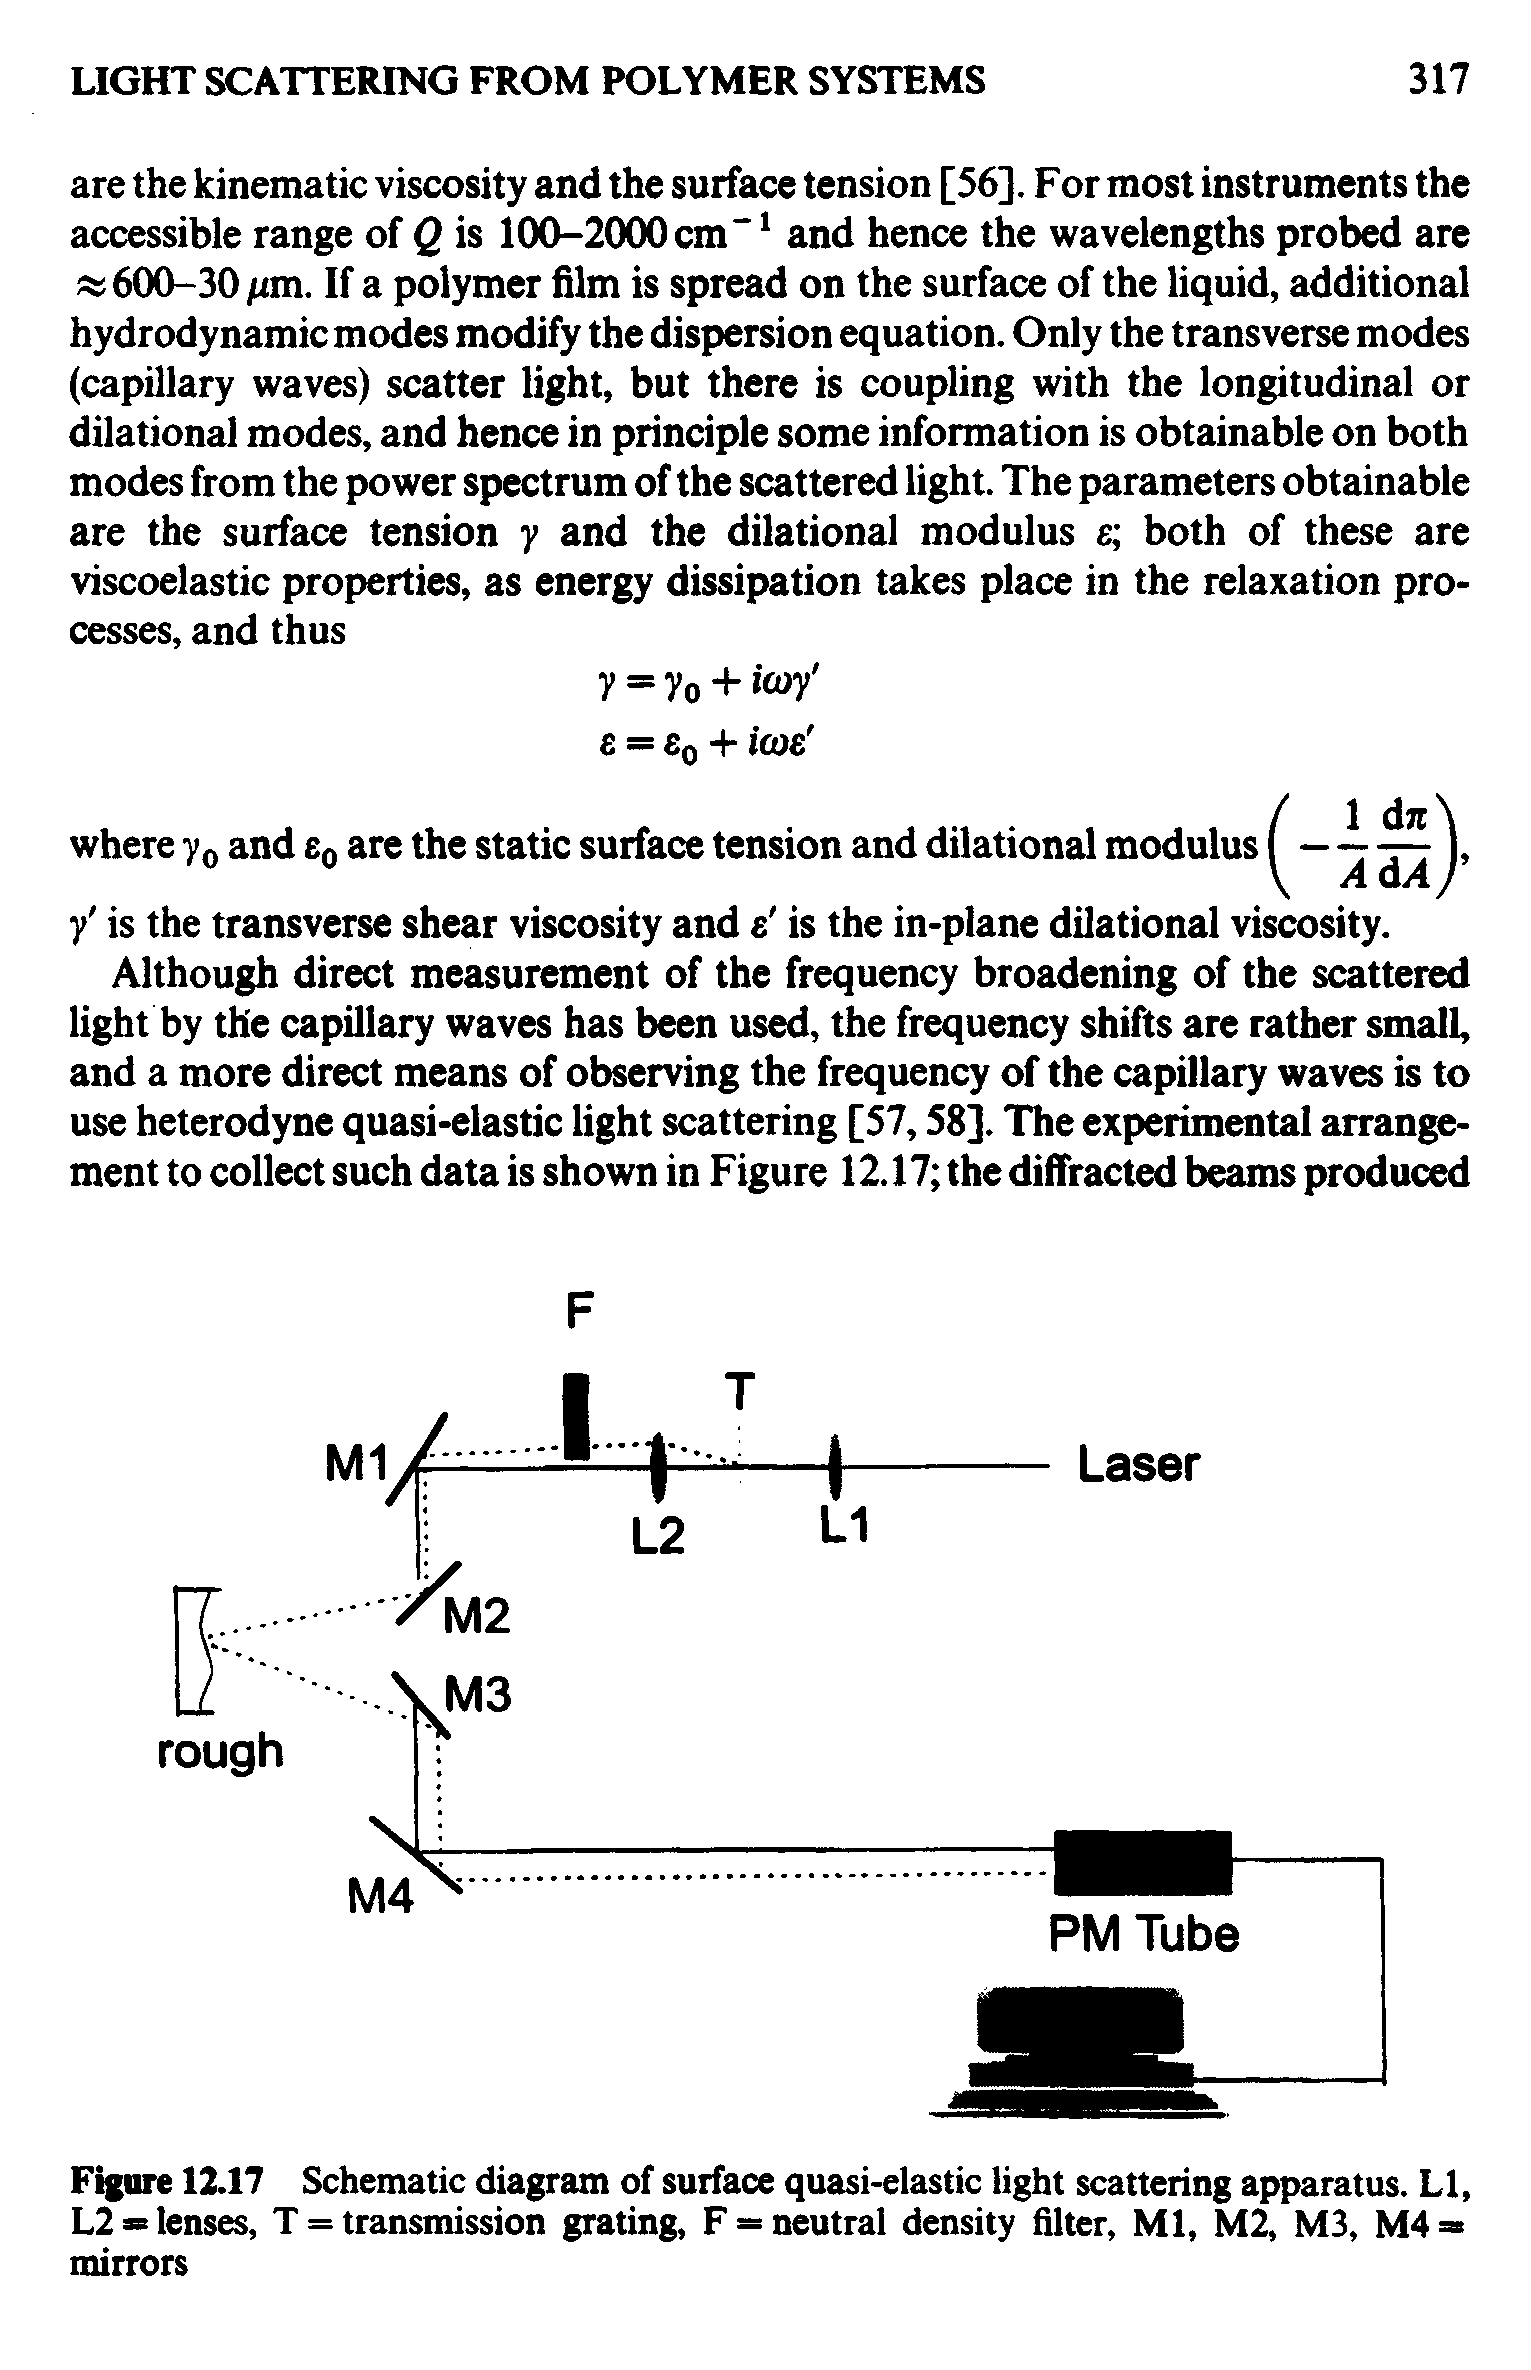 Figure 12.17 Schematic diagram of surface quasi-elastic light scattering apparatus. LI, L2 lenses, T = transmission grating, F — neutral density filter. Ml, M2, M3, M4 mirrors...